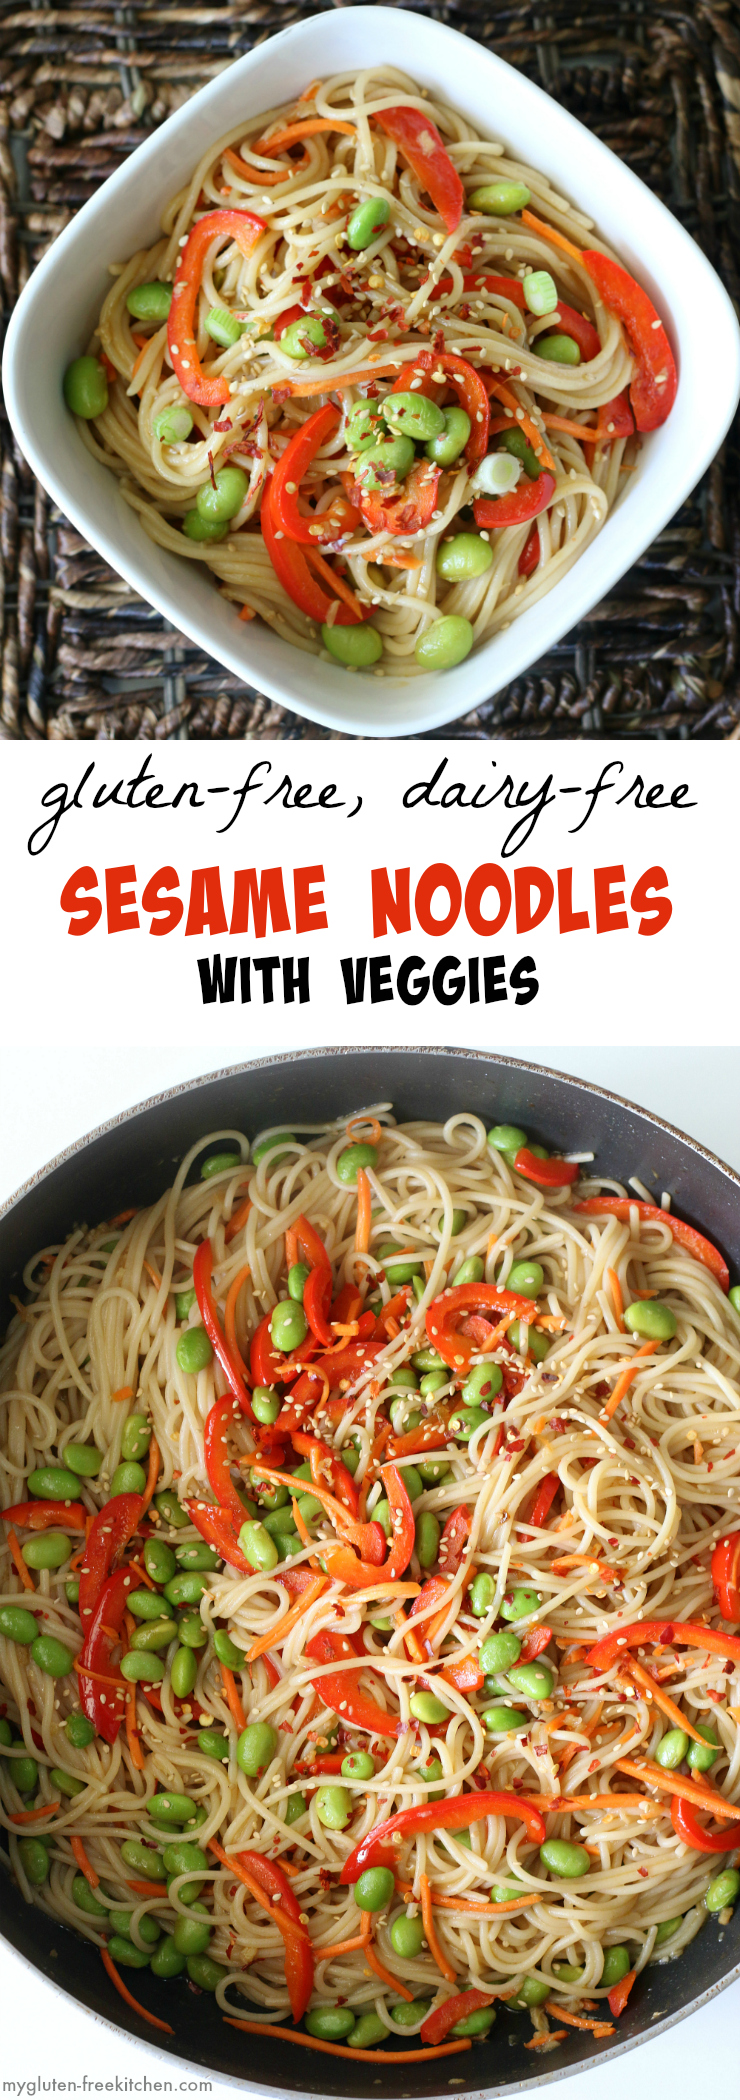 Gluten-free Dairy-free Sesame Noodles with veggies